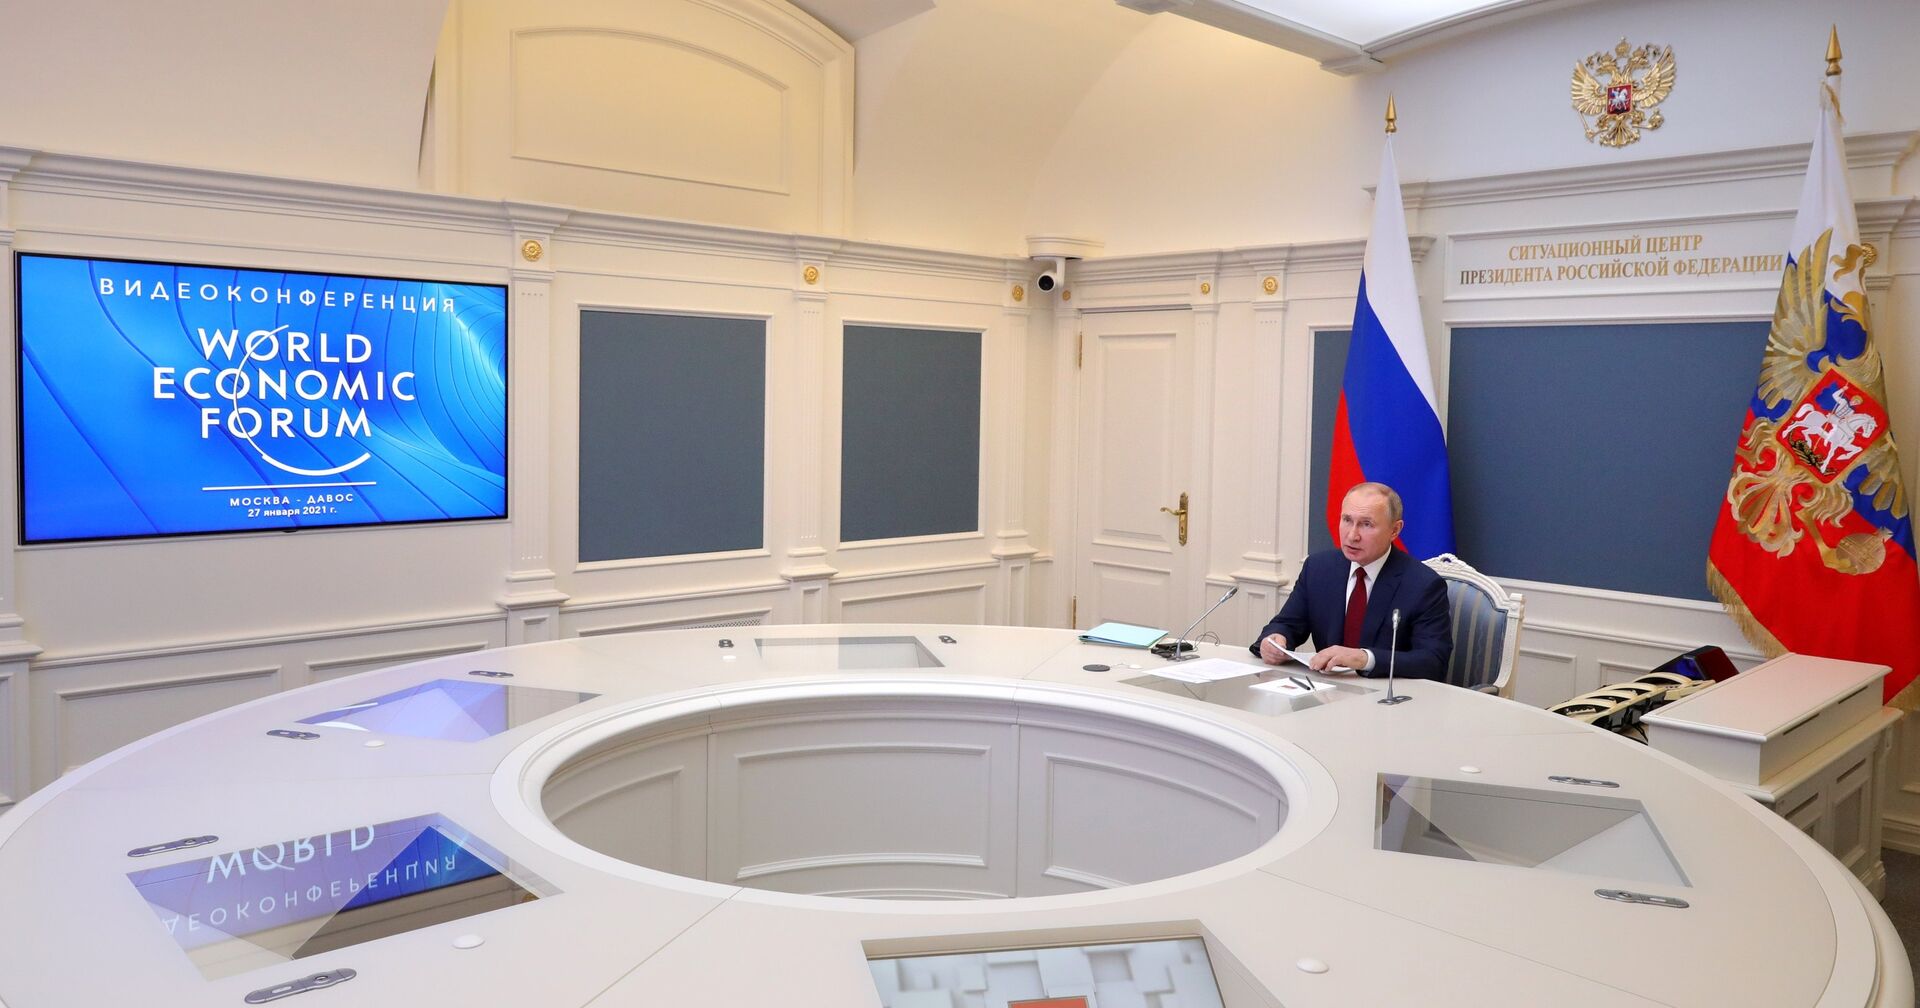 Президент РФ В. Путин выступил на сессии онлайн-форума Давосская повестка дня 2021 - ИноСМИ, 1920, 29.01.2021